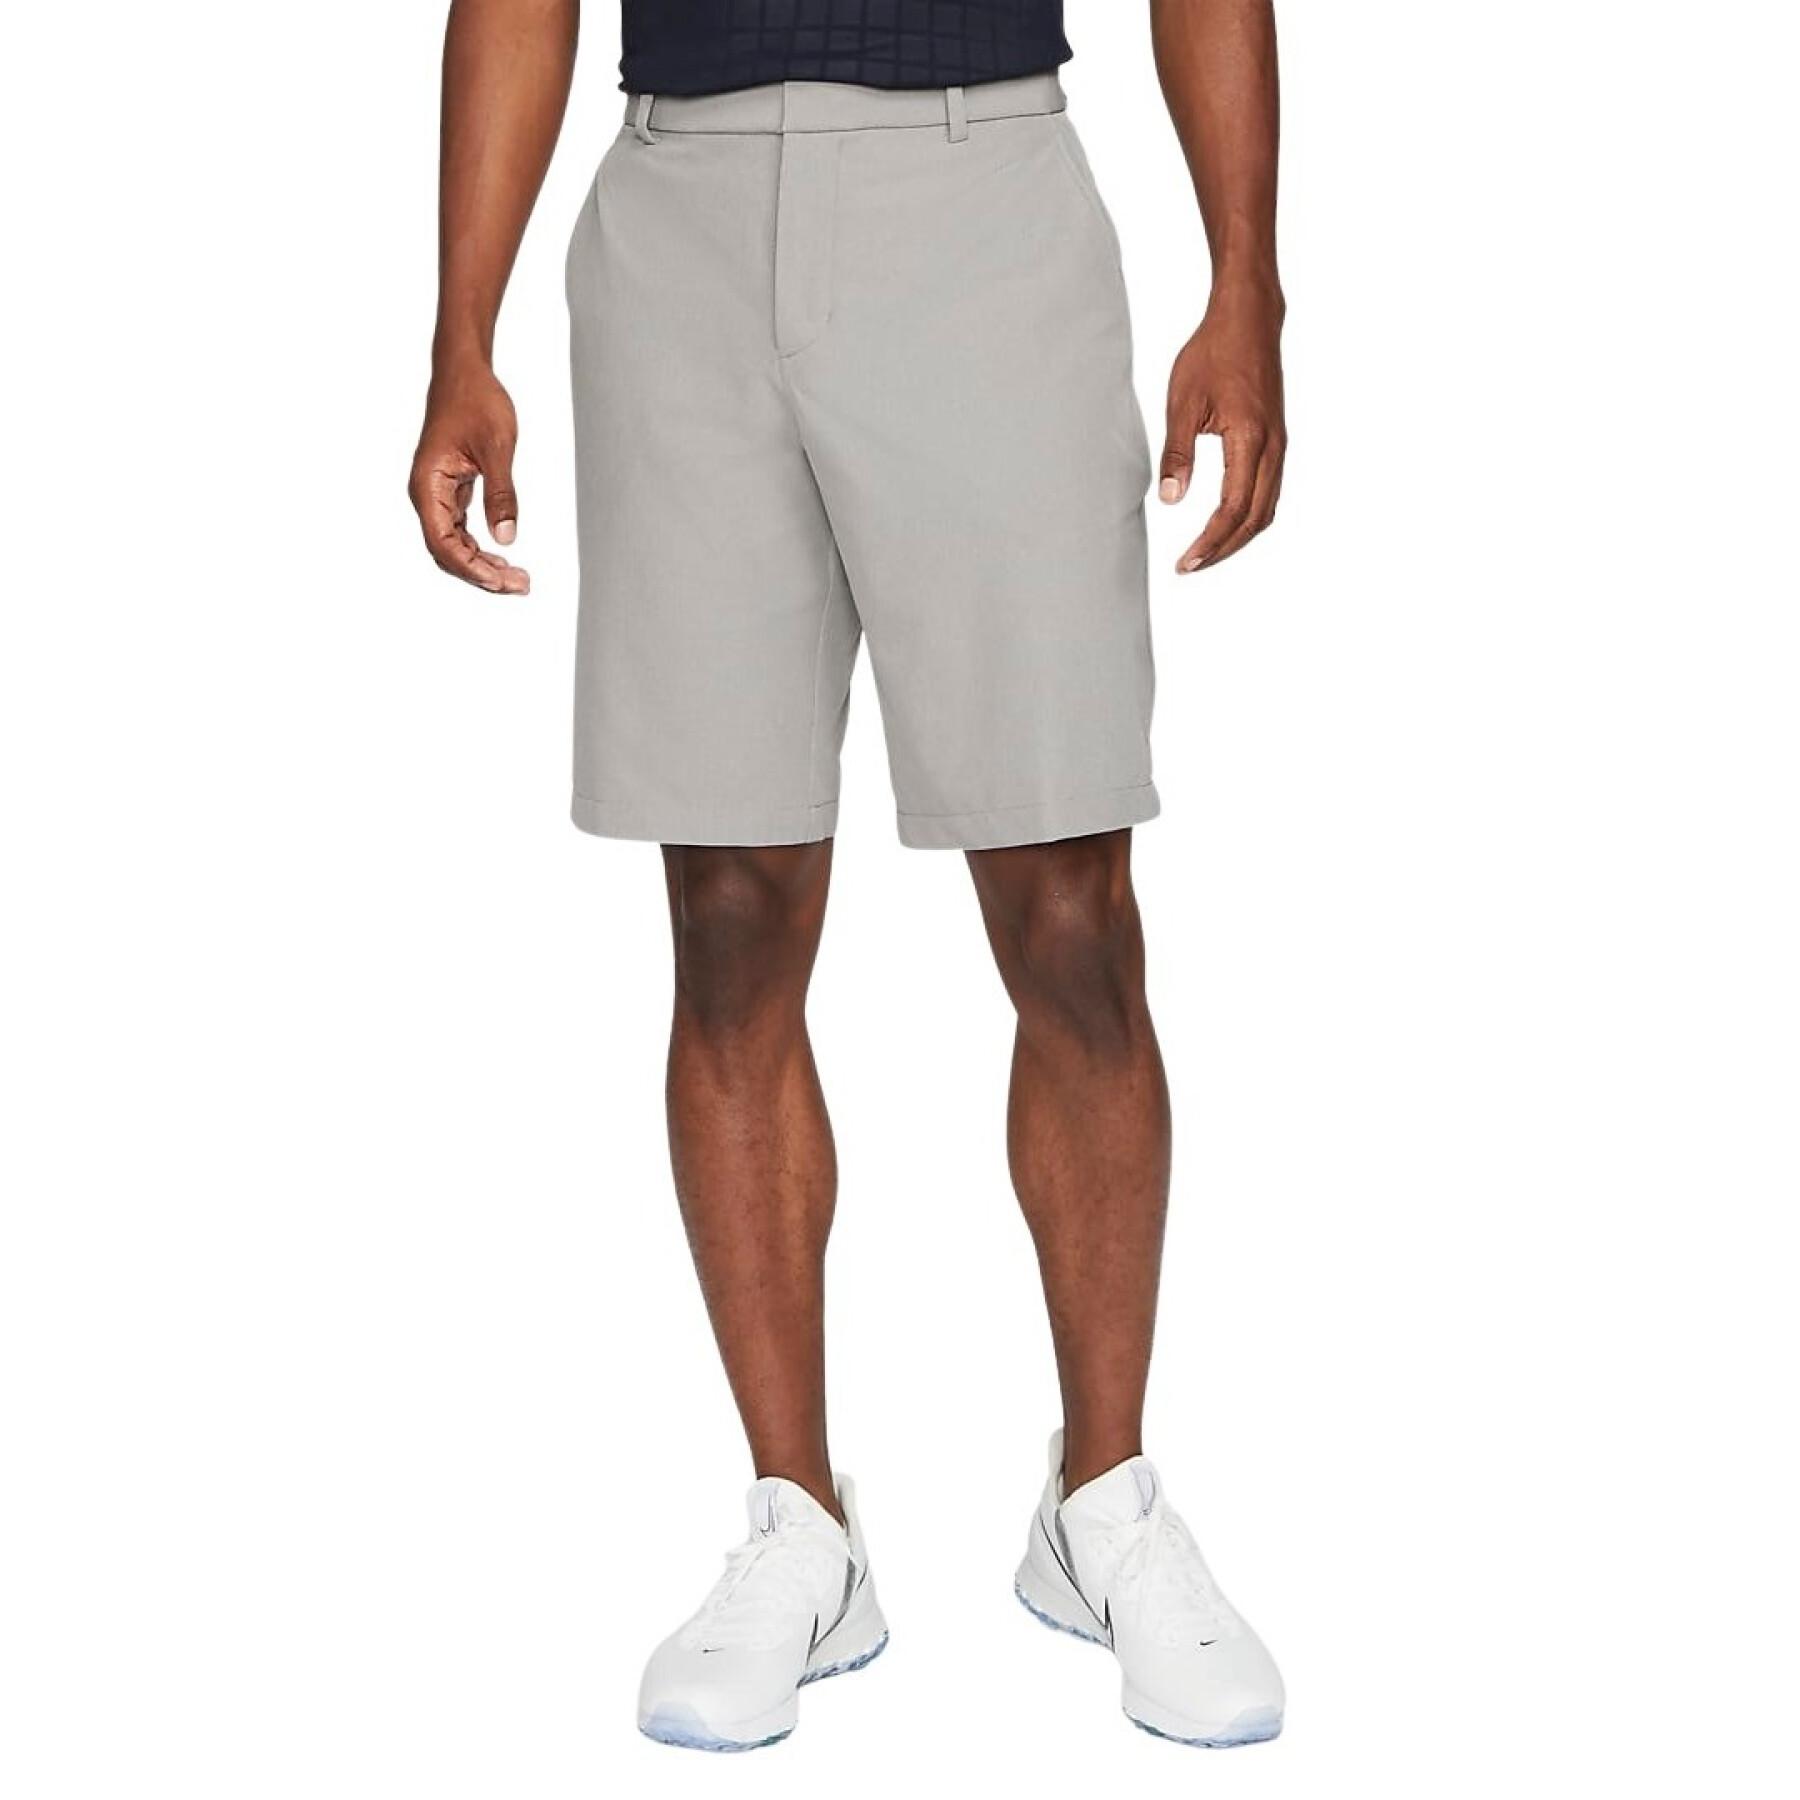 Bermuda shorts Nike Dri-Fit